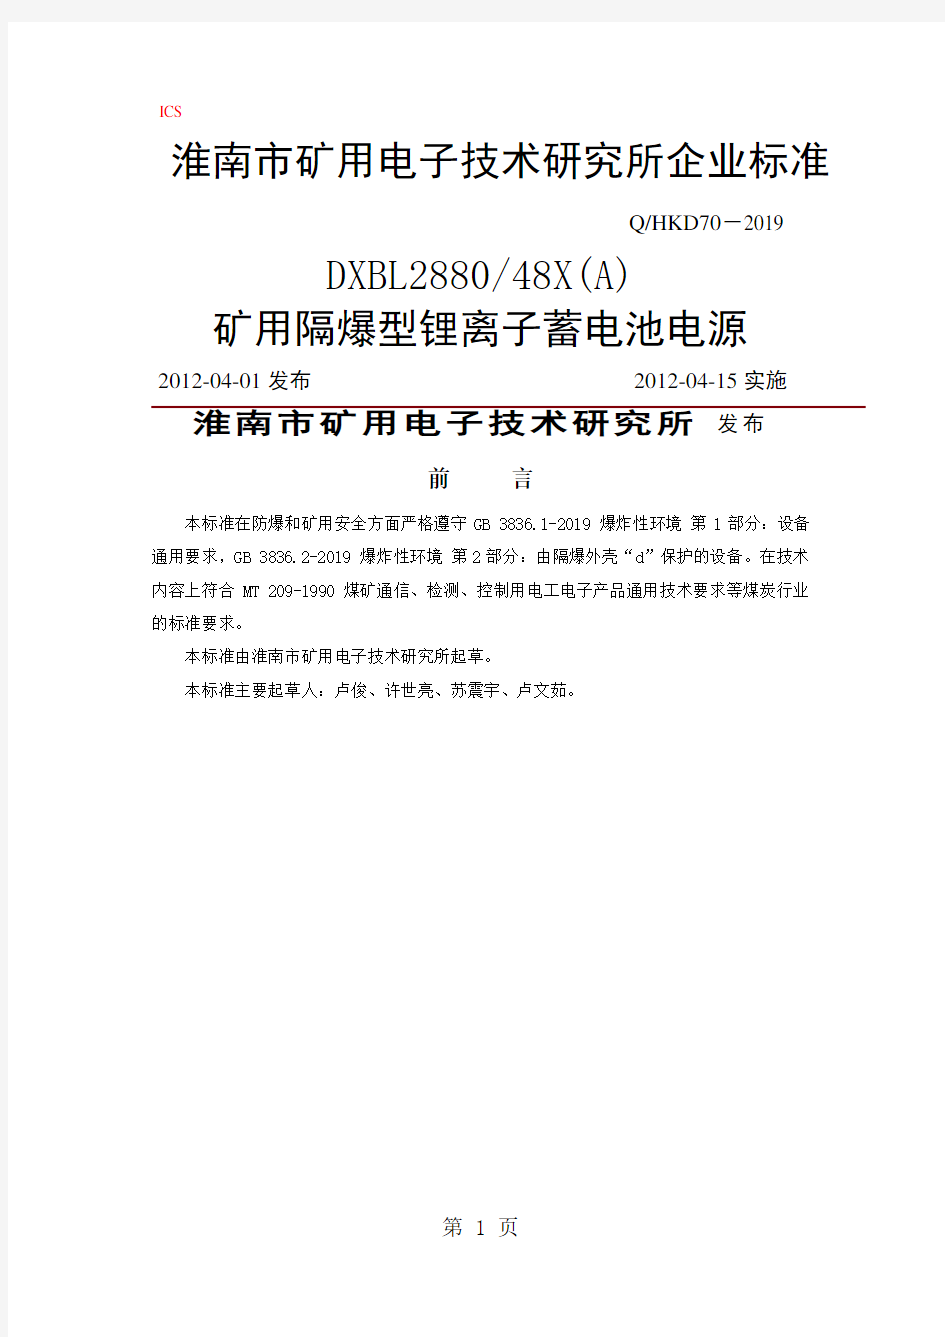 DX锂离子蓄电池电源企业标准14页word文档